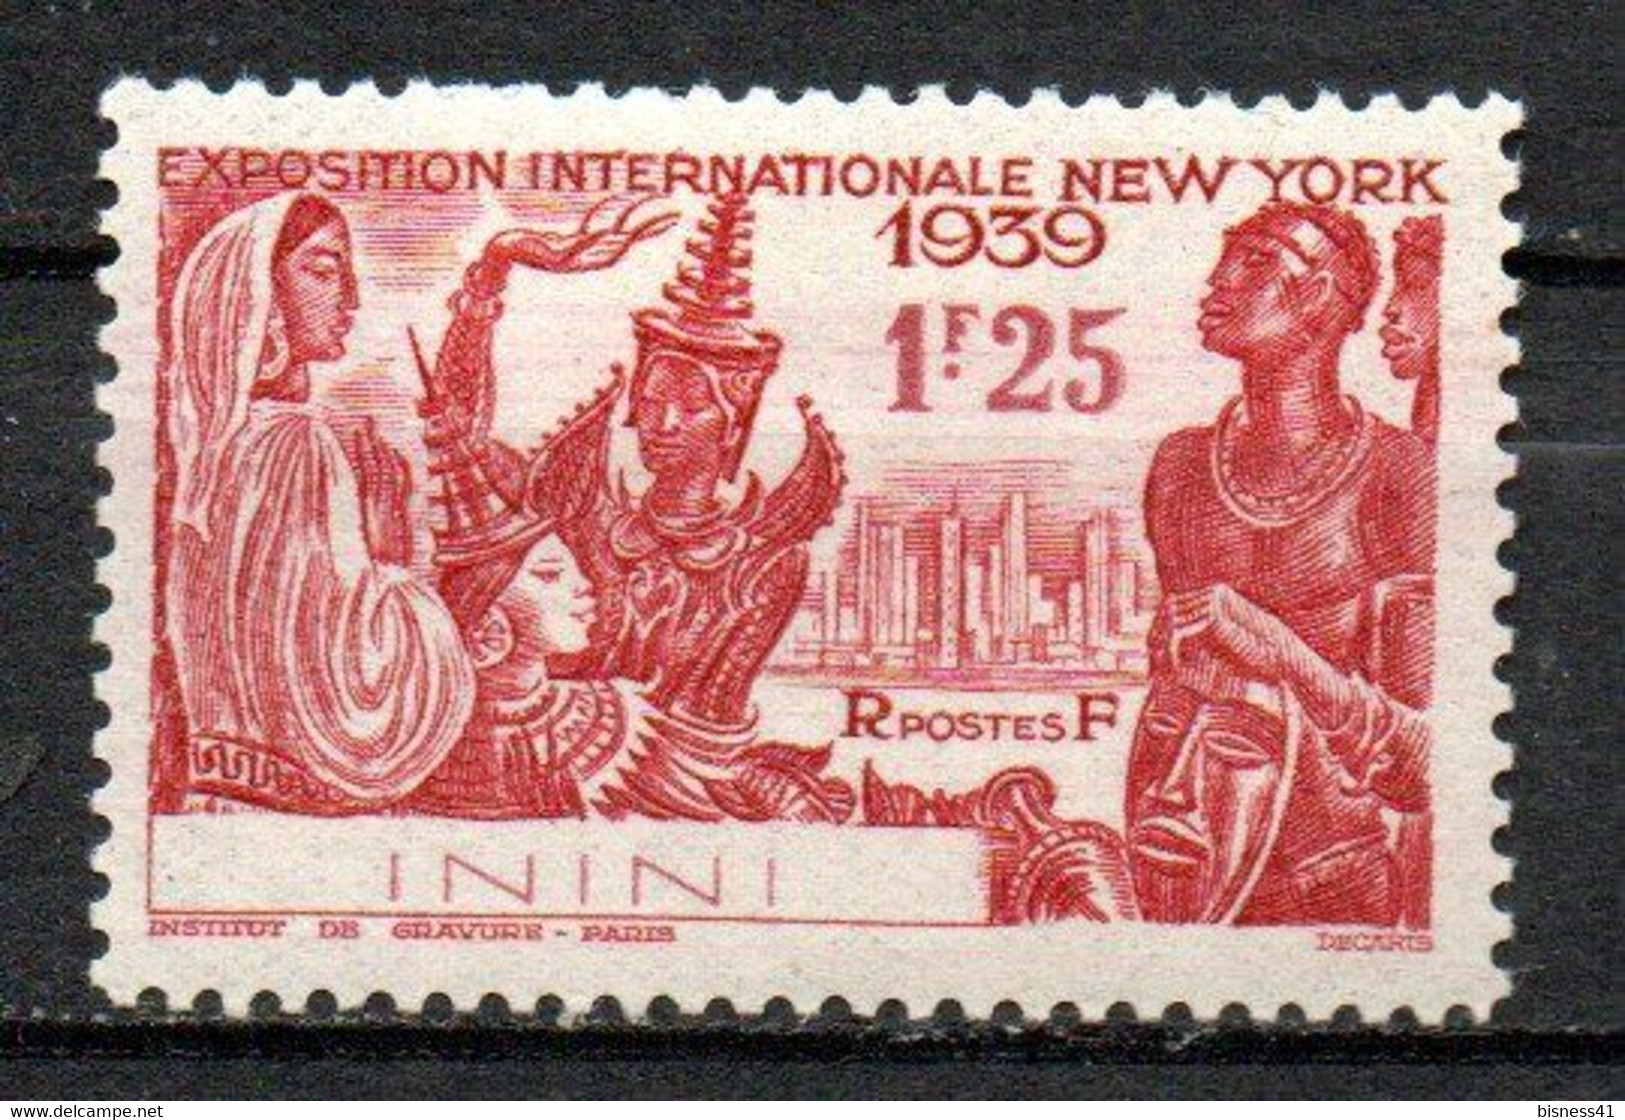 Col32 Colonie Inini N° 29 Neuf X MH Cote : 5,00 € - Unused Stamps